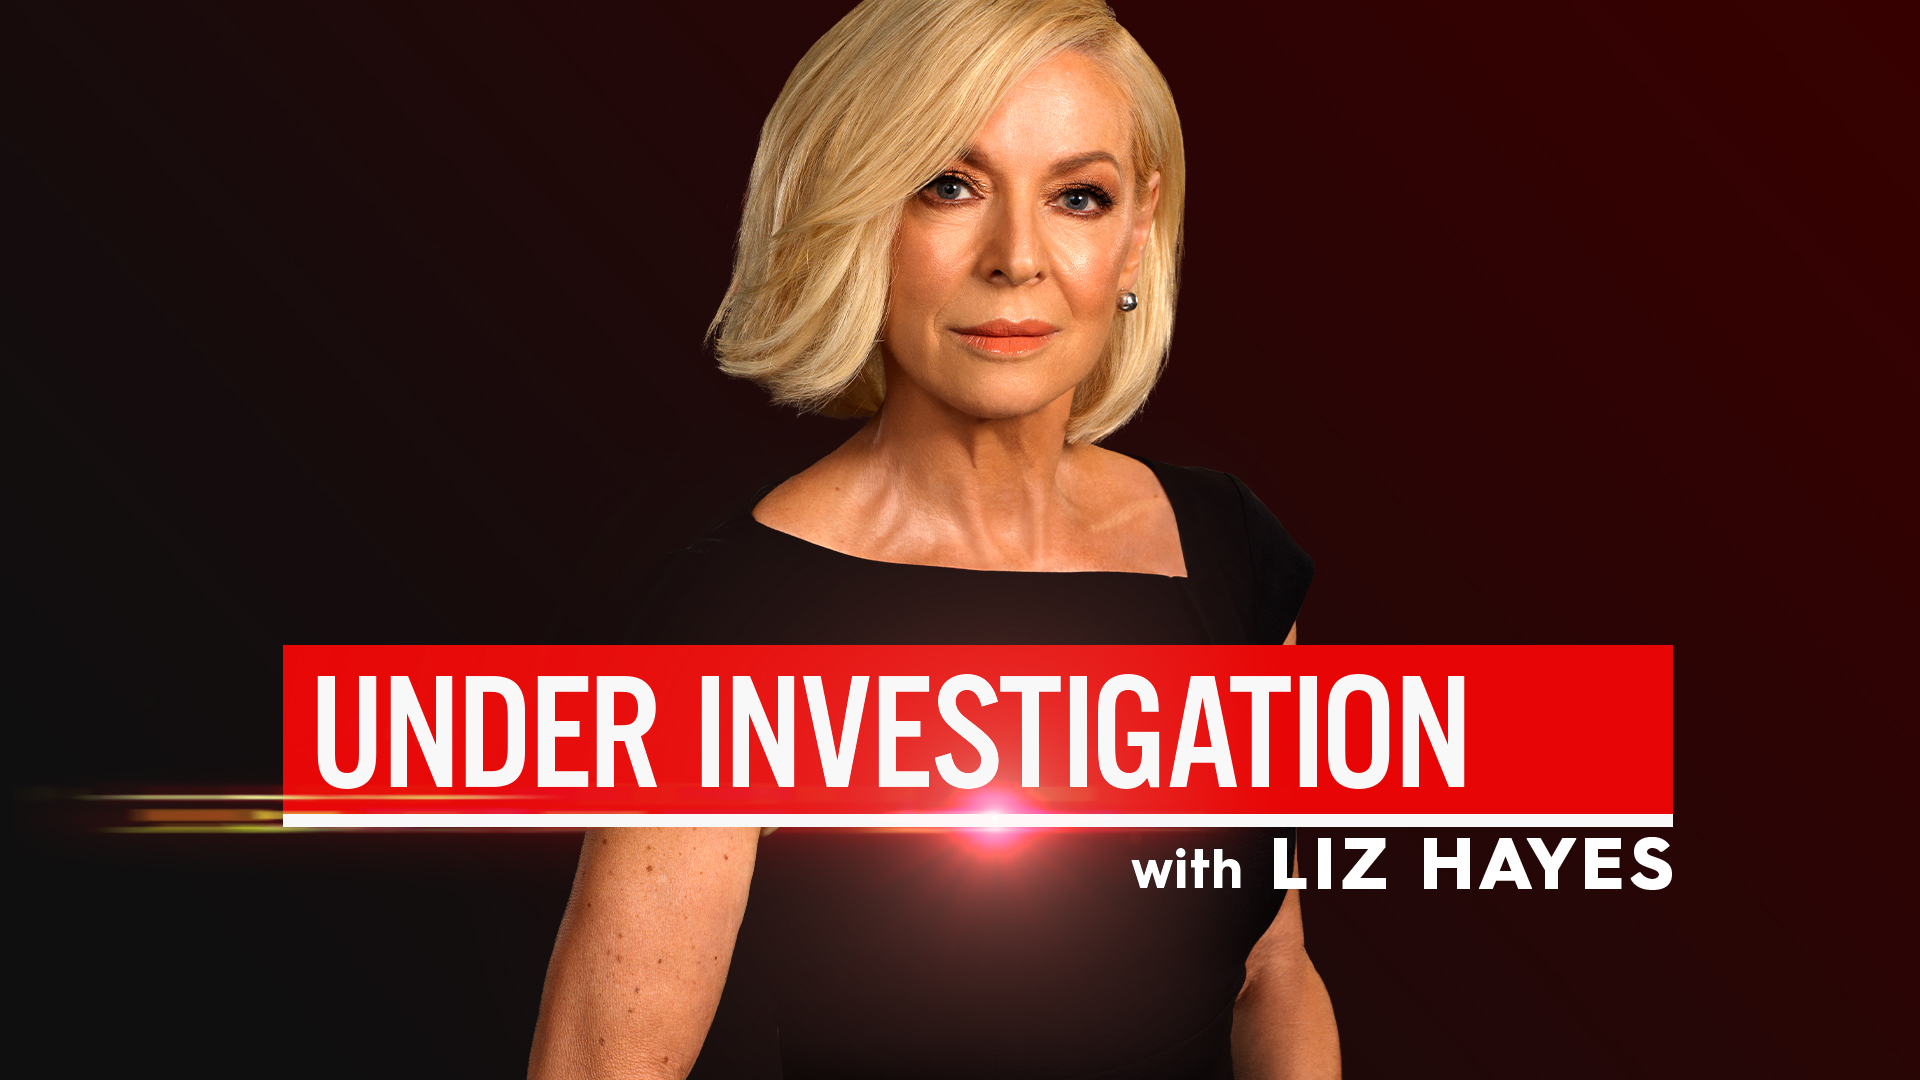 Under Investigation with Liz Hayes: premieres this week